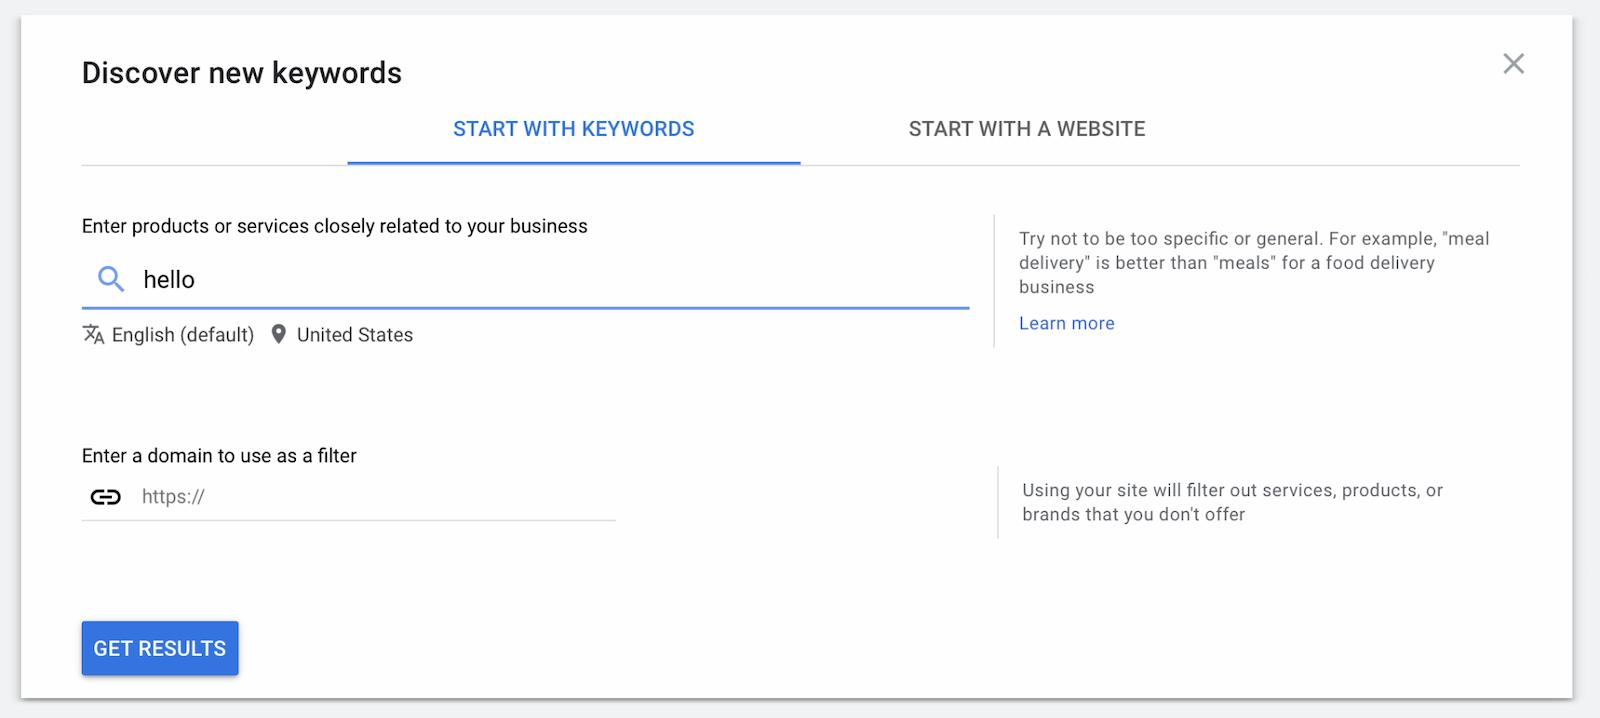 Google Keyword Planner has a simple interface